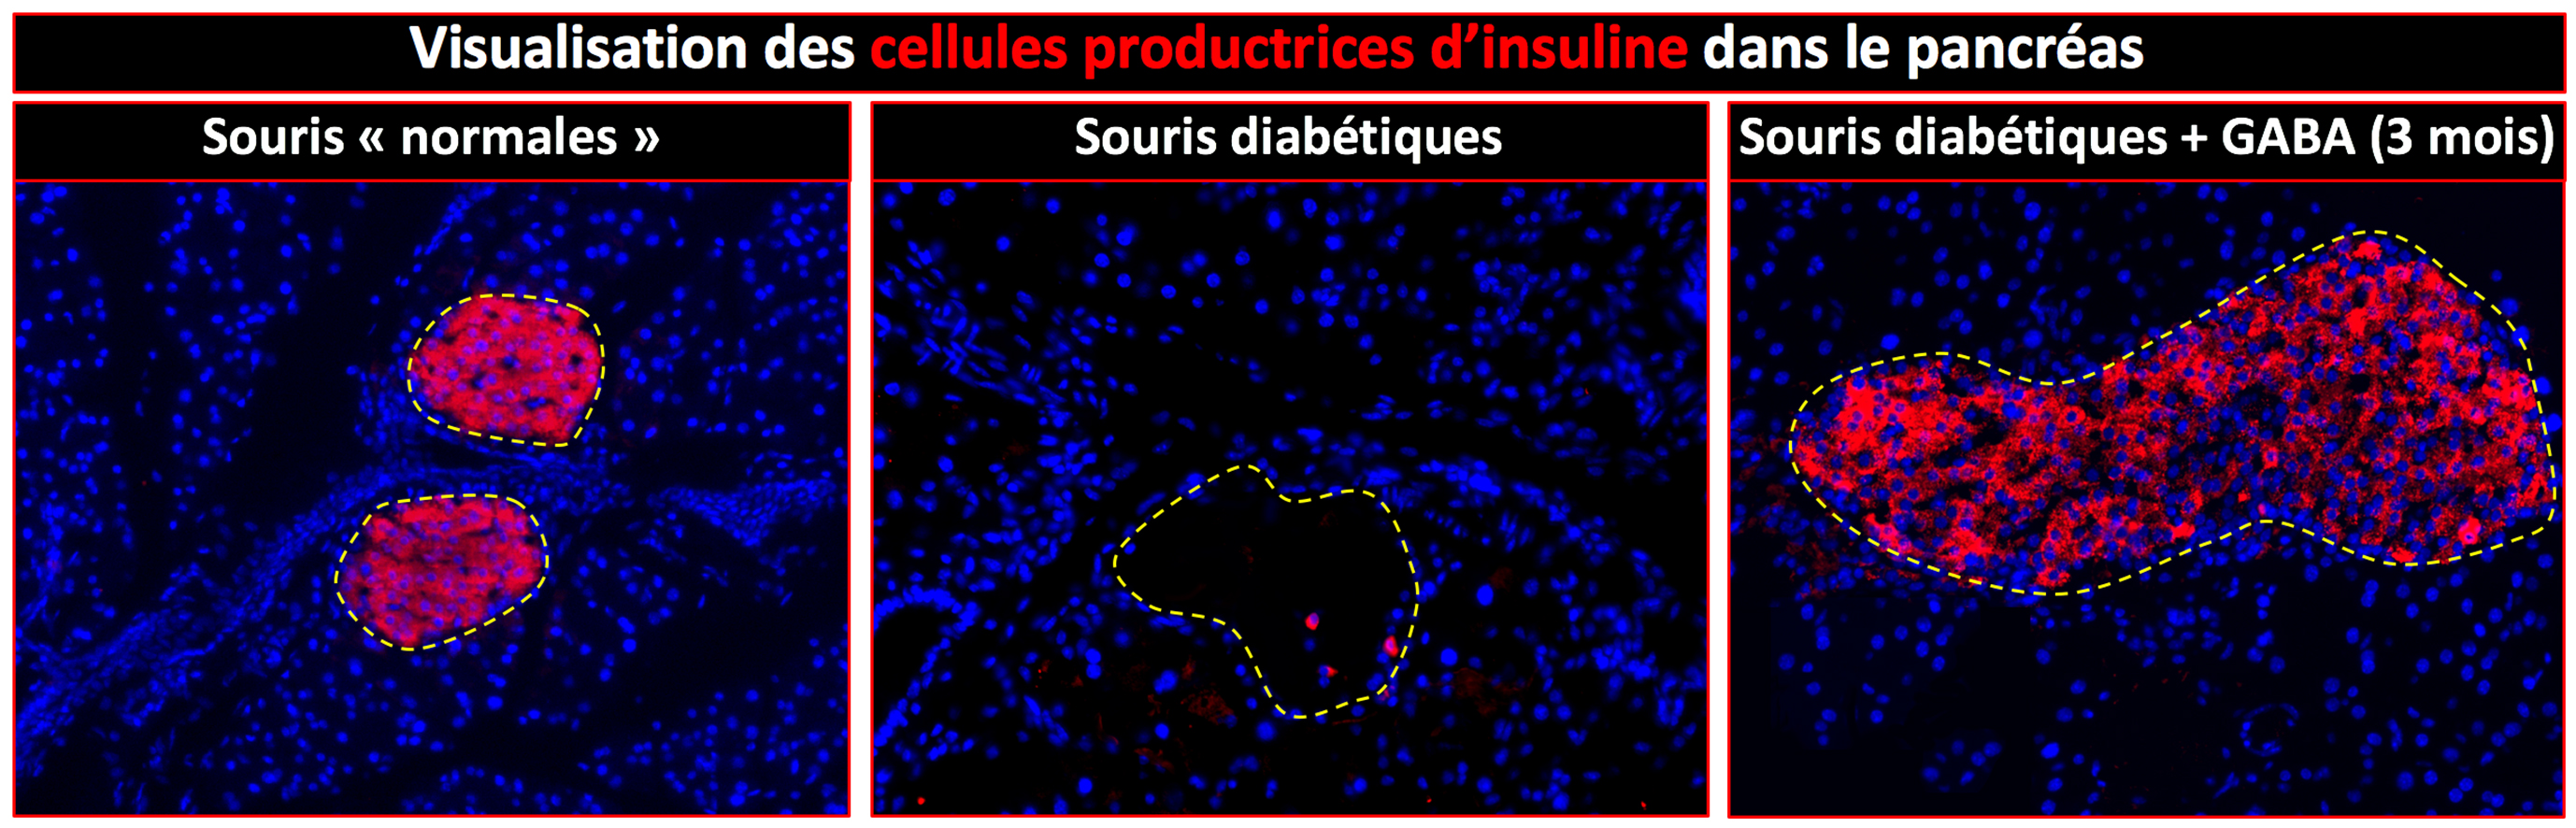 A molecule to regenerate insulin-producing cells in type 1 diabetic patients